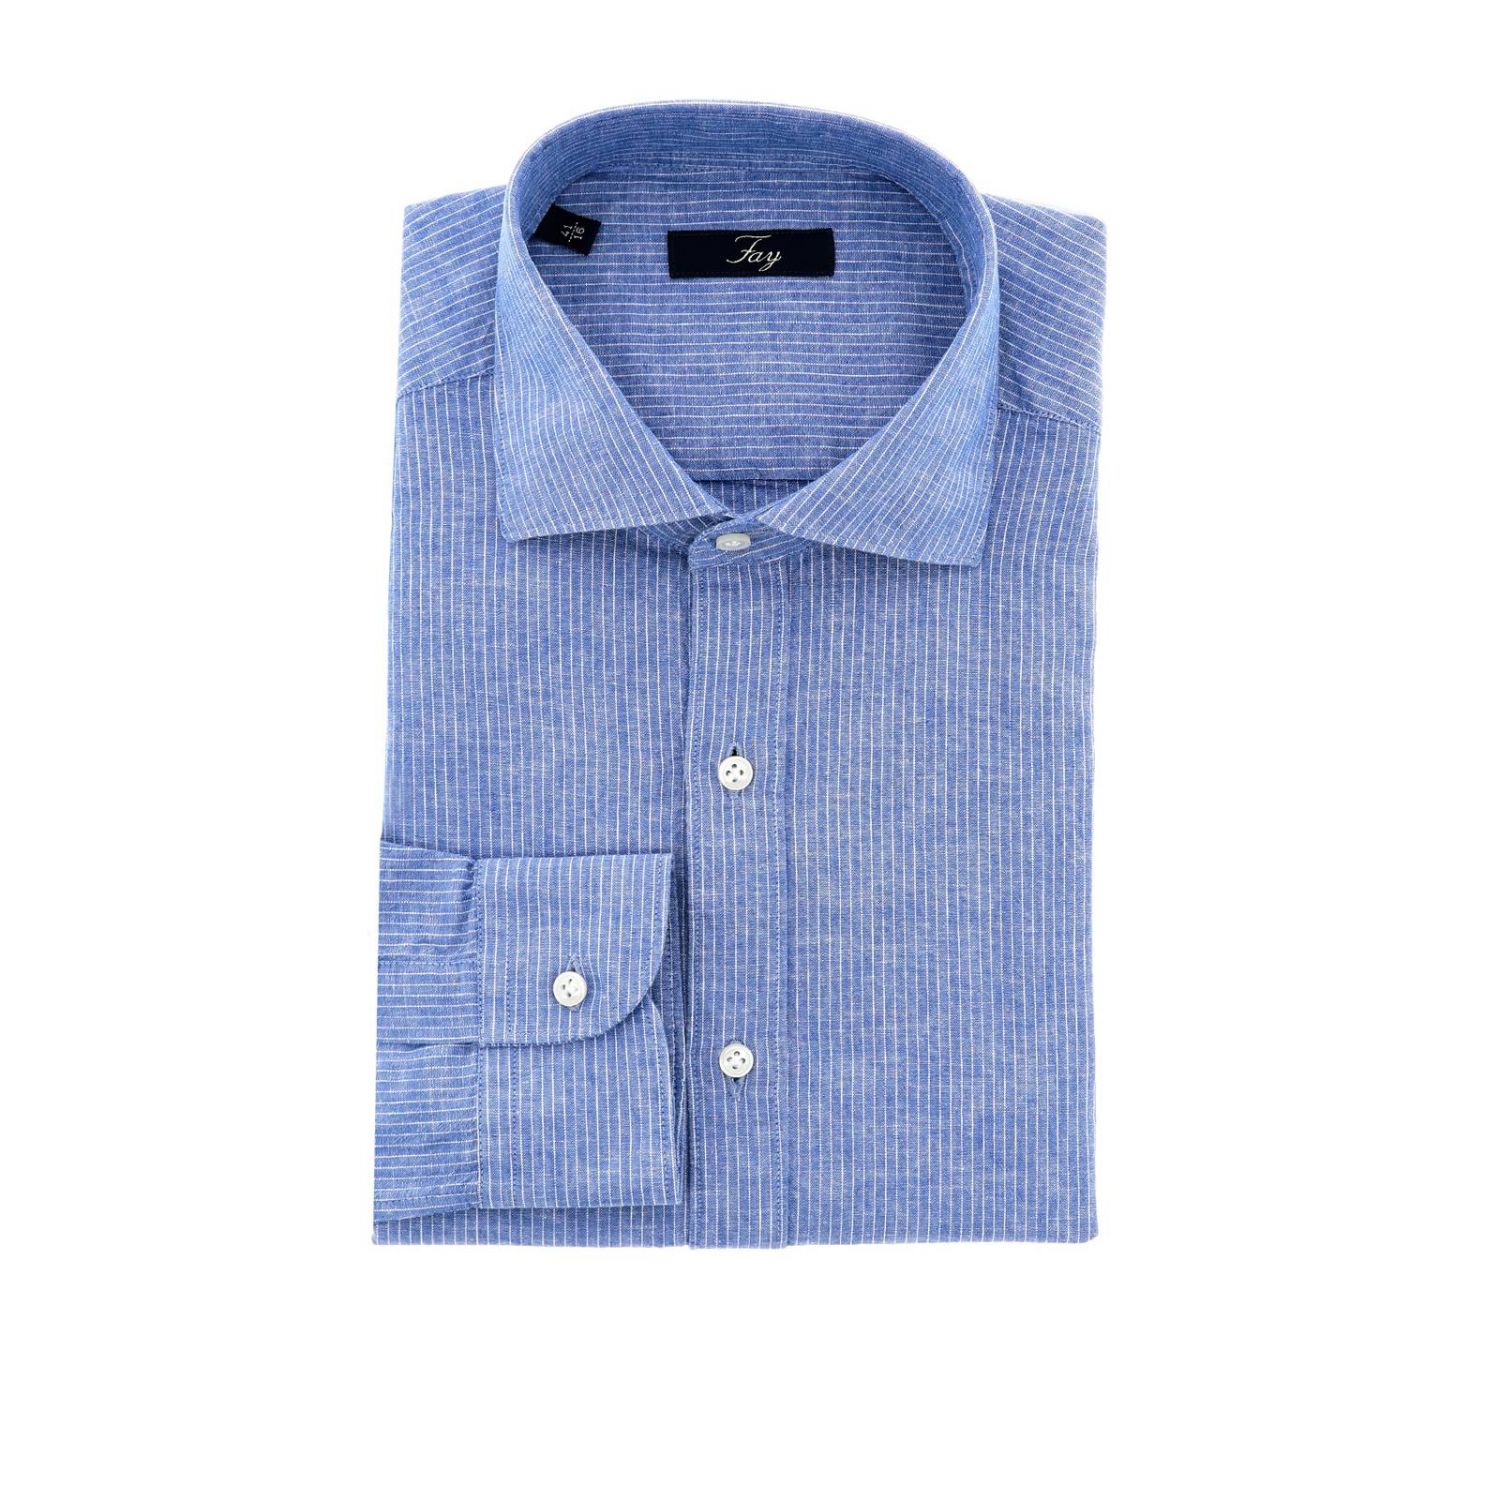 Fay Outlet: Shirt men - Gnawed Blue | Shirt Fay NCMA1382590 QOX GIGLIO.COM